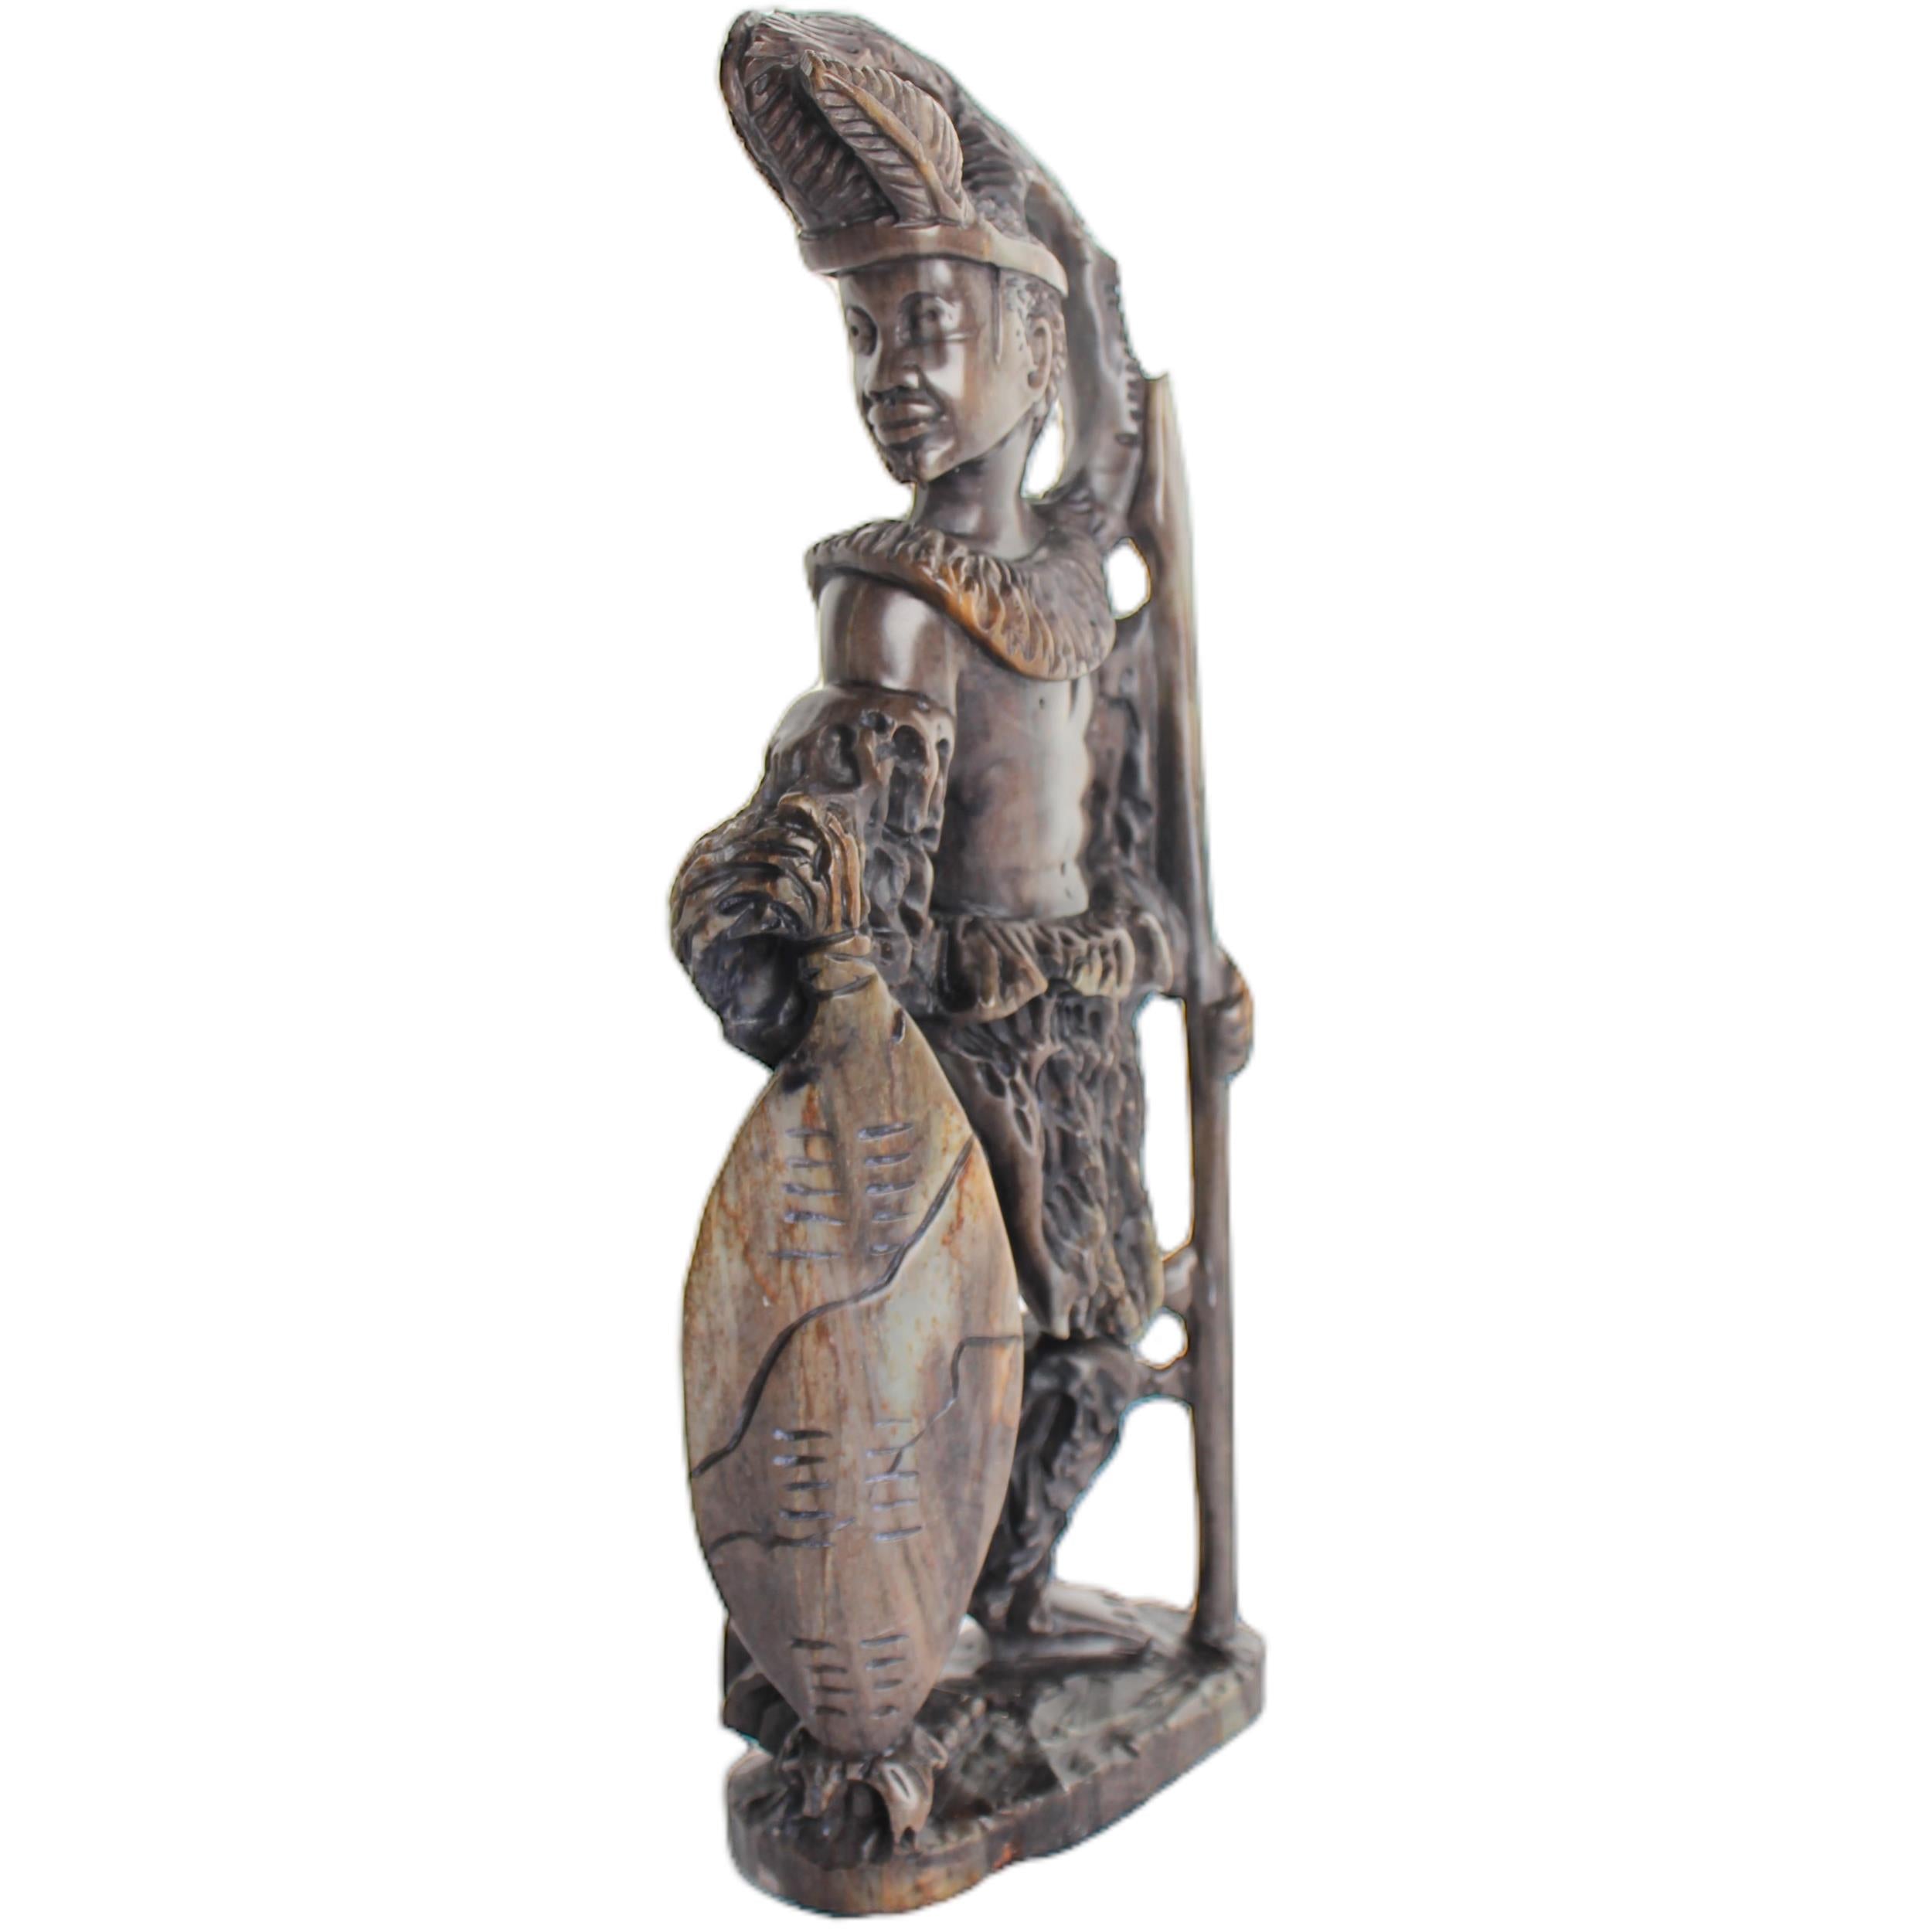 Shona Tribe Serpentine Stone Warrior Figure ~11.8" Tall - Warrior Figure